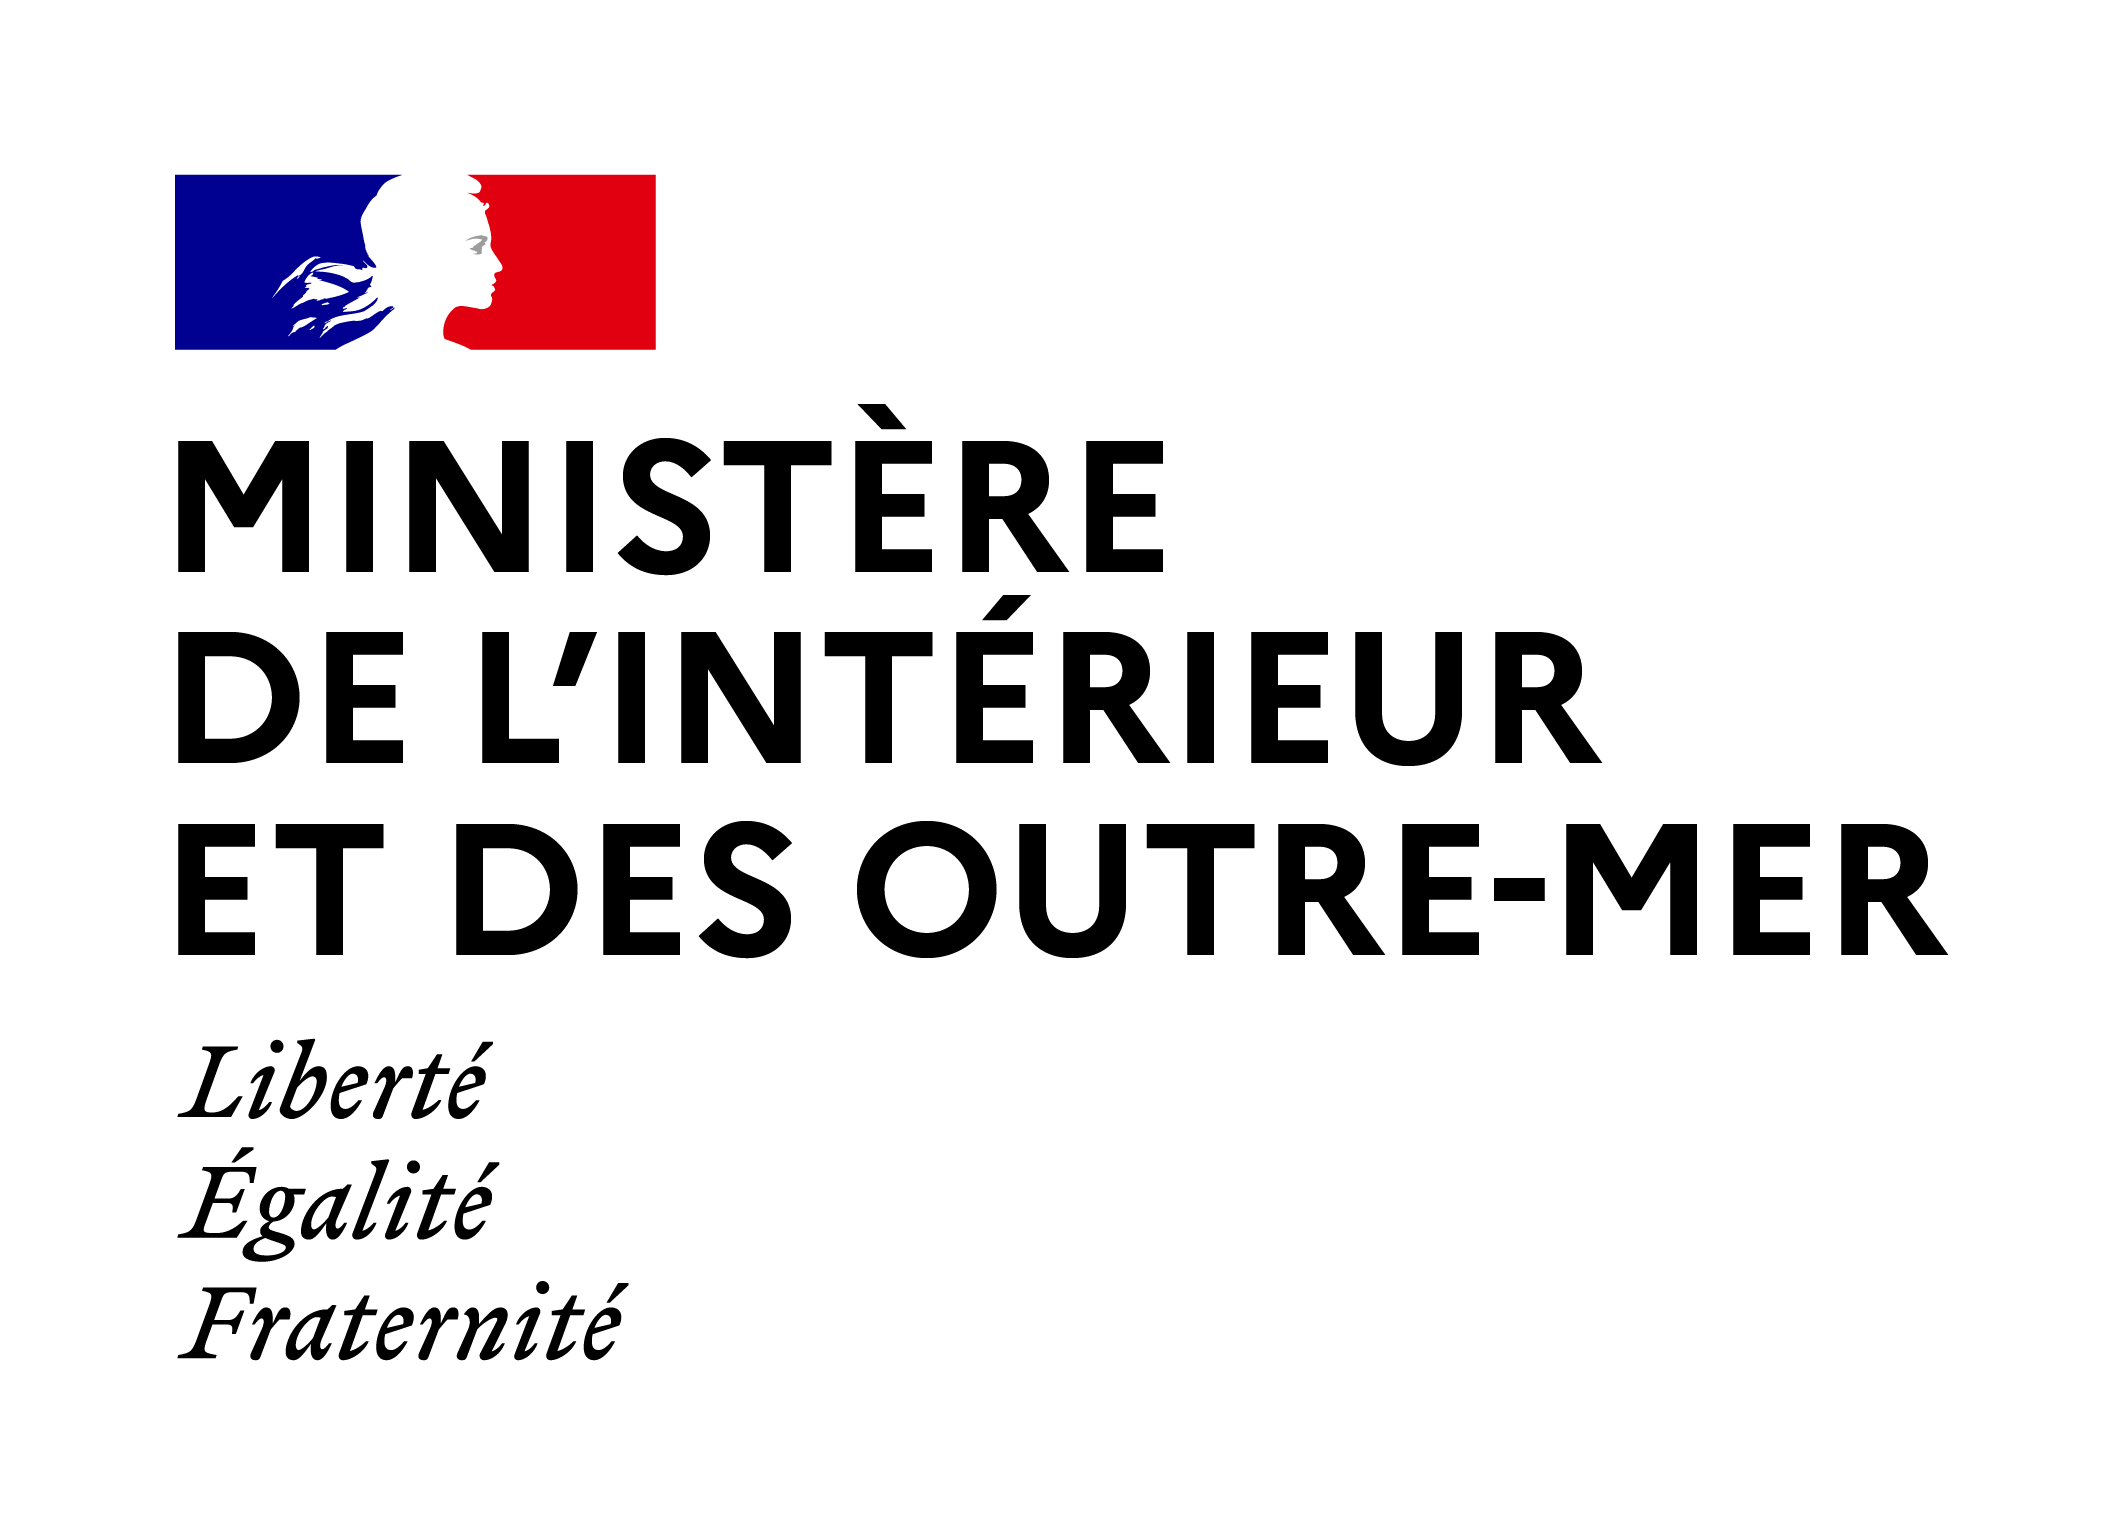 Ministere_des_outre_mer.png